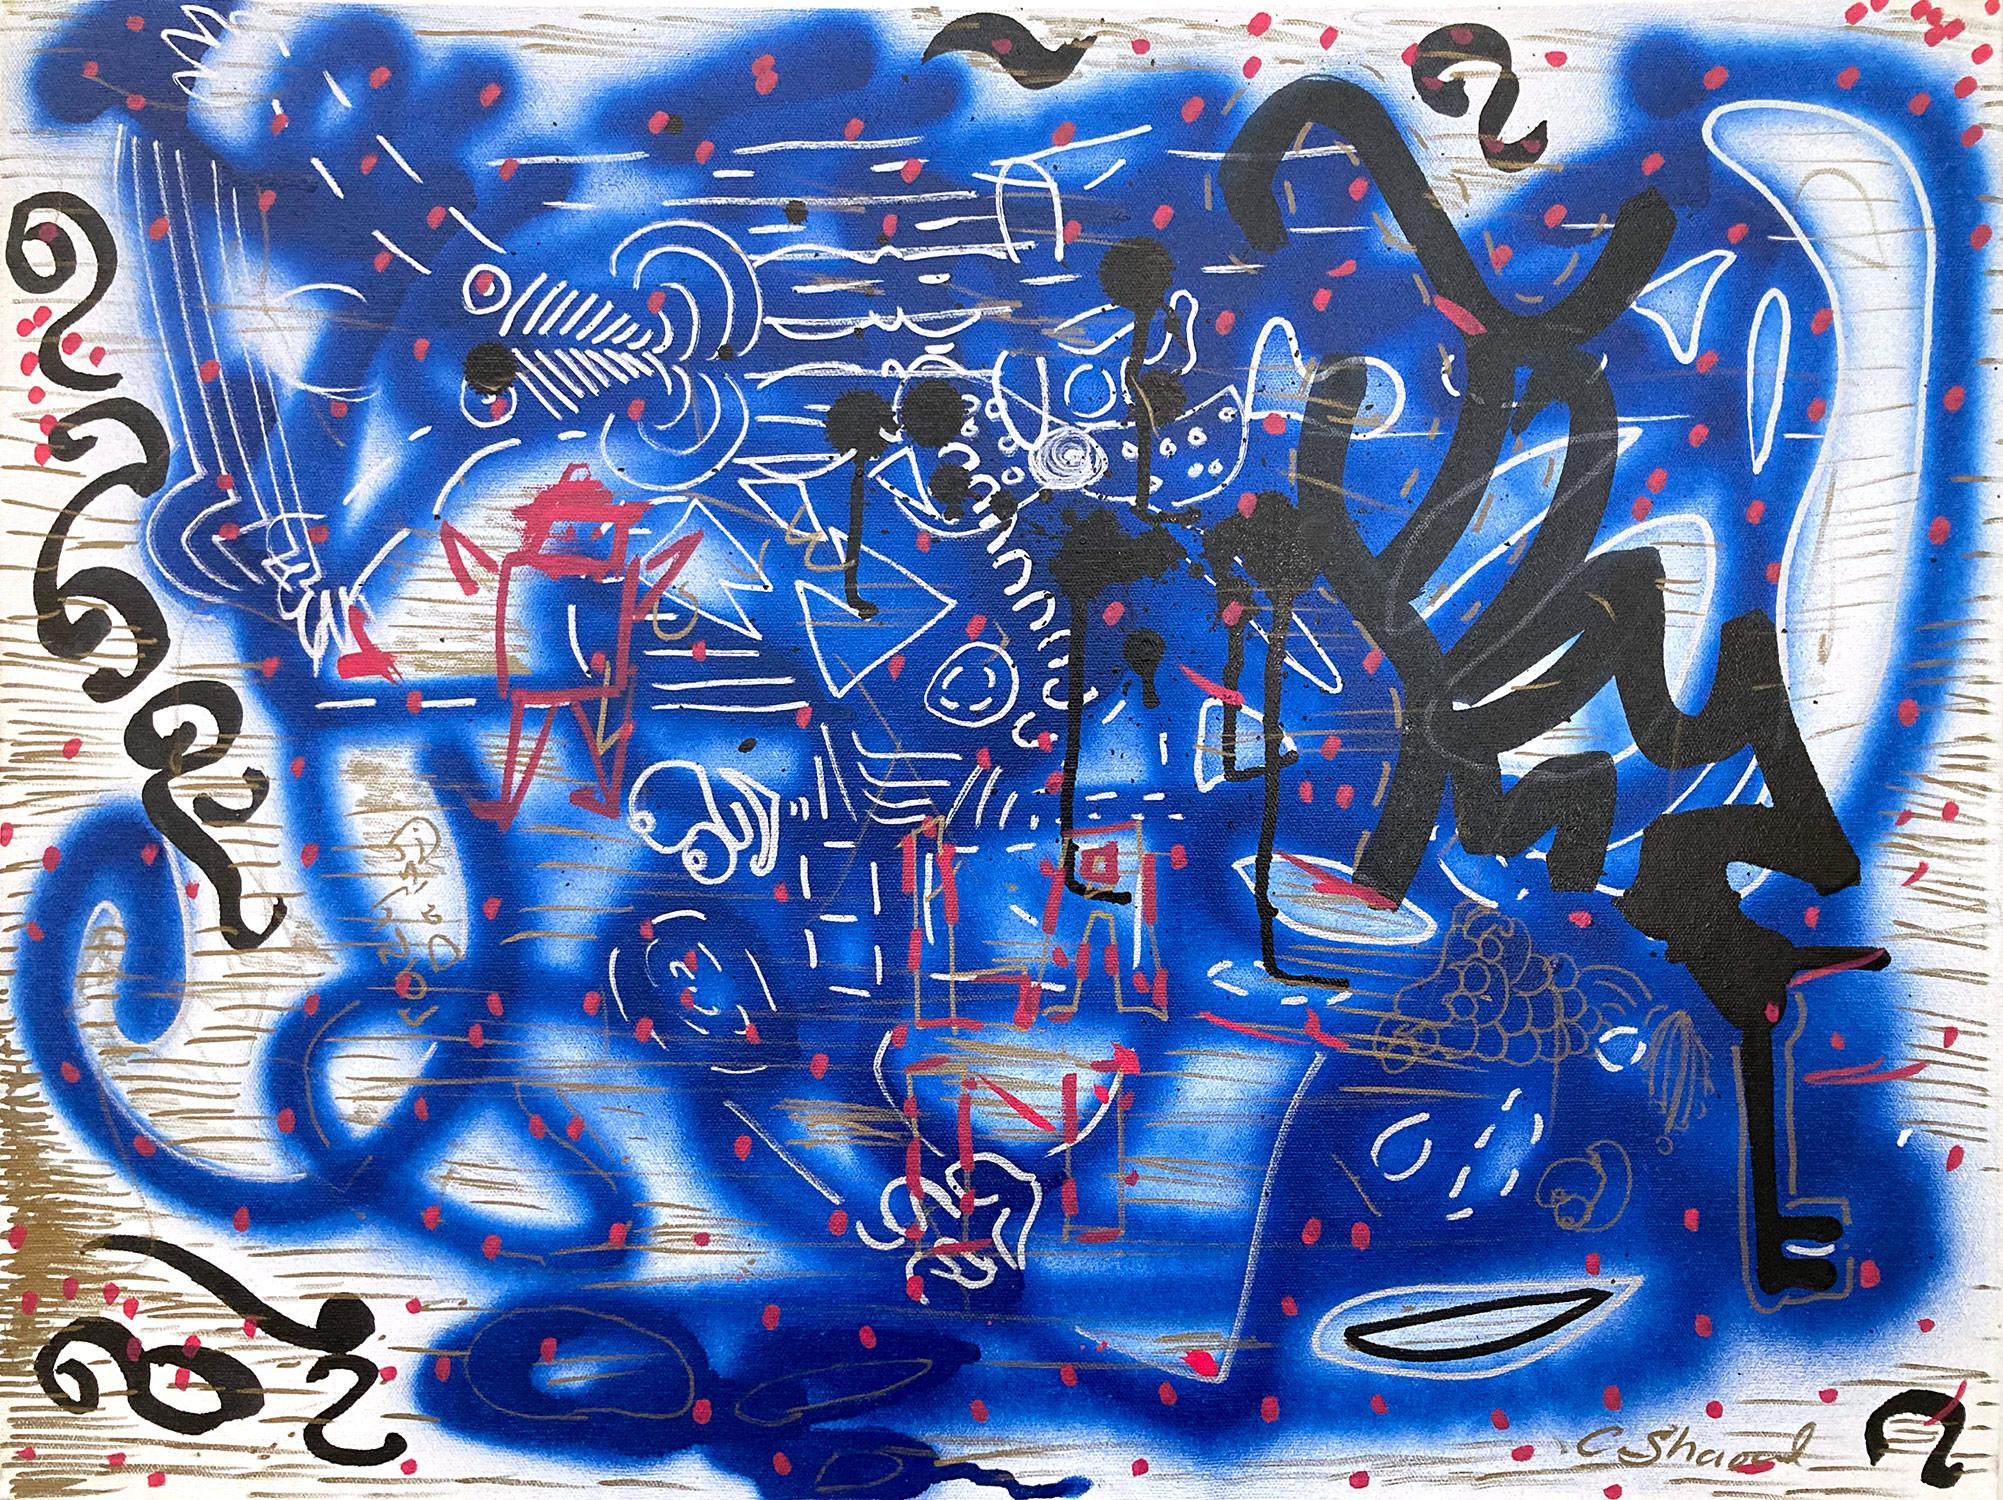 LA II (Angel Ortiz) Abstract Painting – „Music Box“ Dekorierte Graffiti Street Art Acryl Sprühfarbe und Tinte auf Leinwand